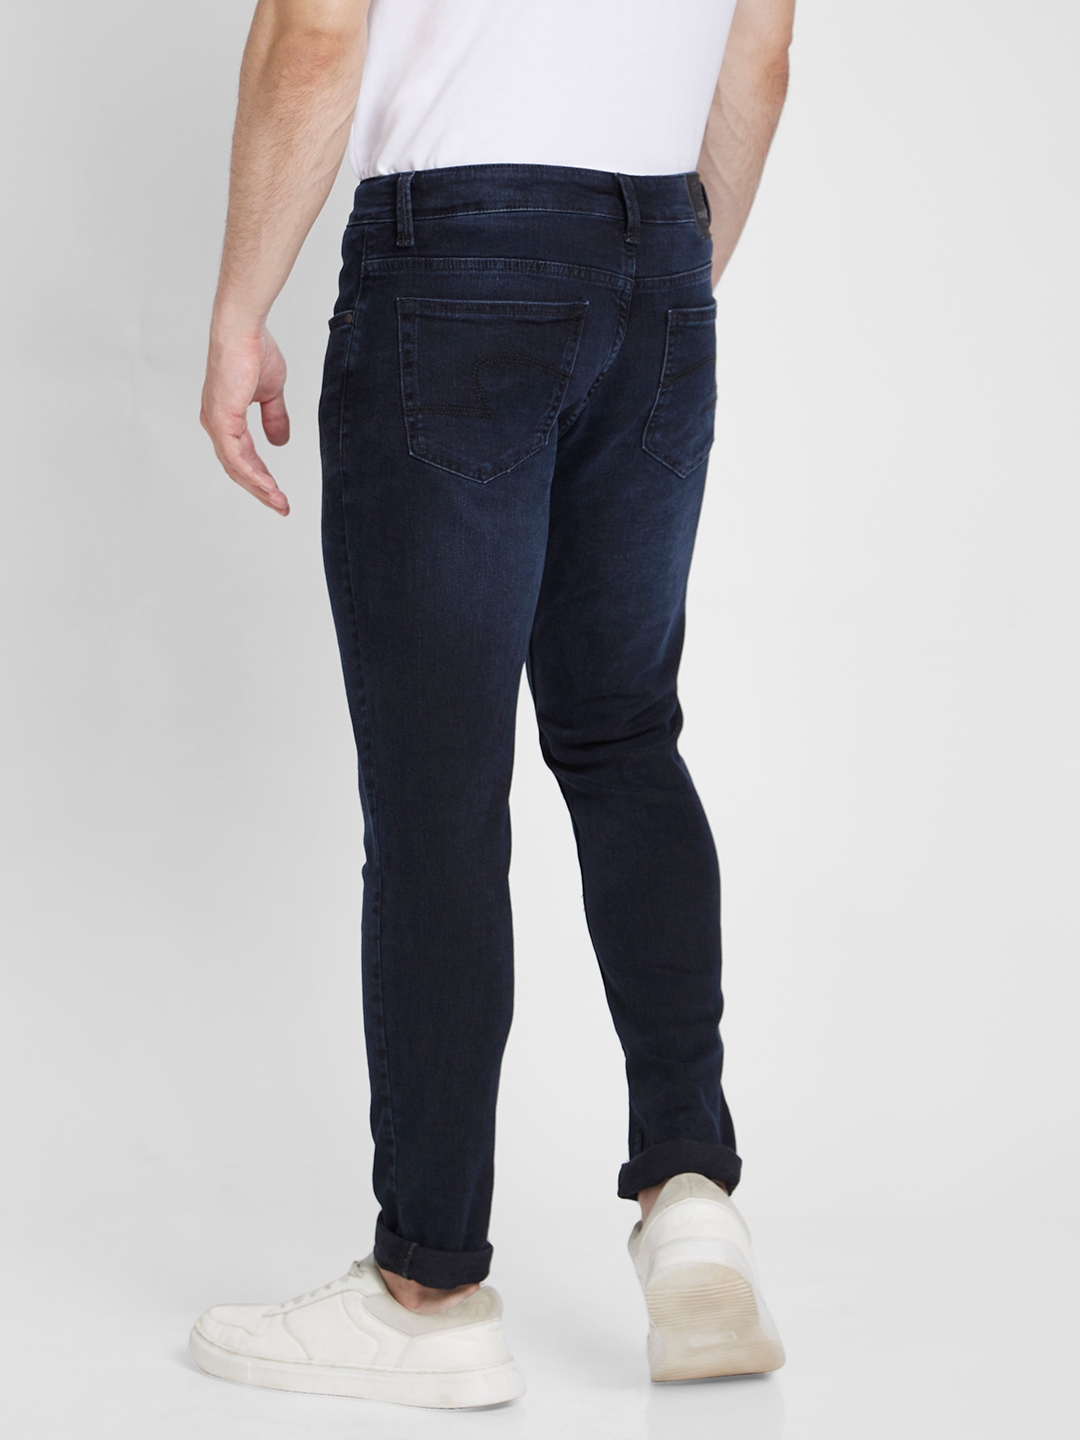 spykar | Spykar Men Charcoal Black Cotton Stretch Super Slim Fit Tapered Length Clean Look Low Rise Jeans - (Super Skinny) 2